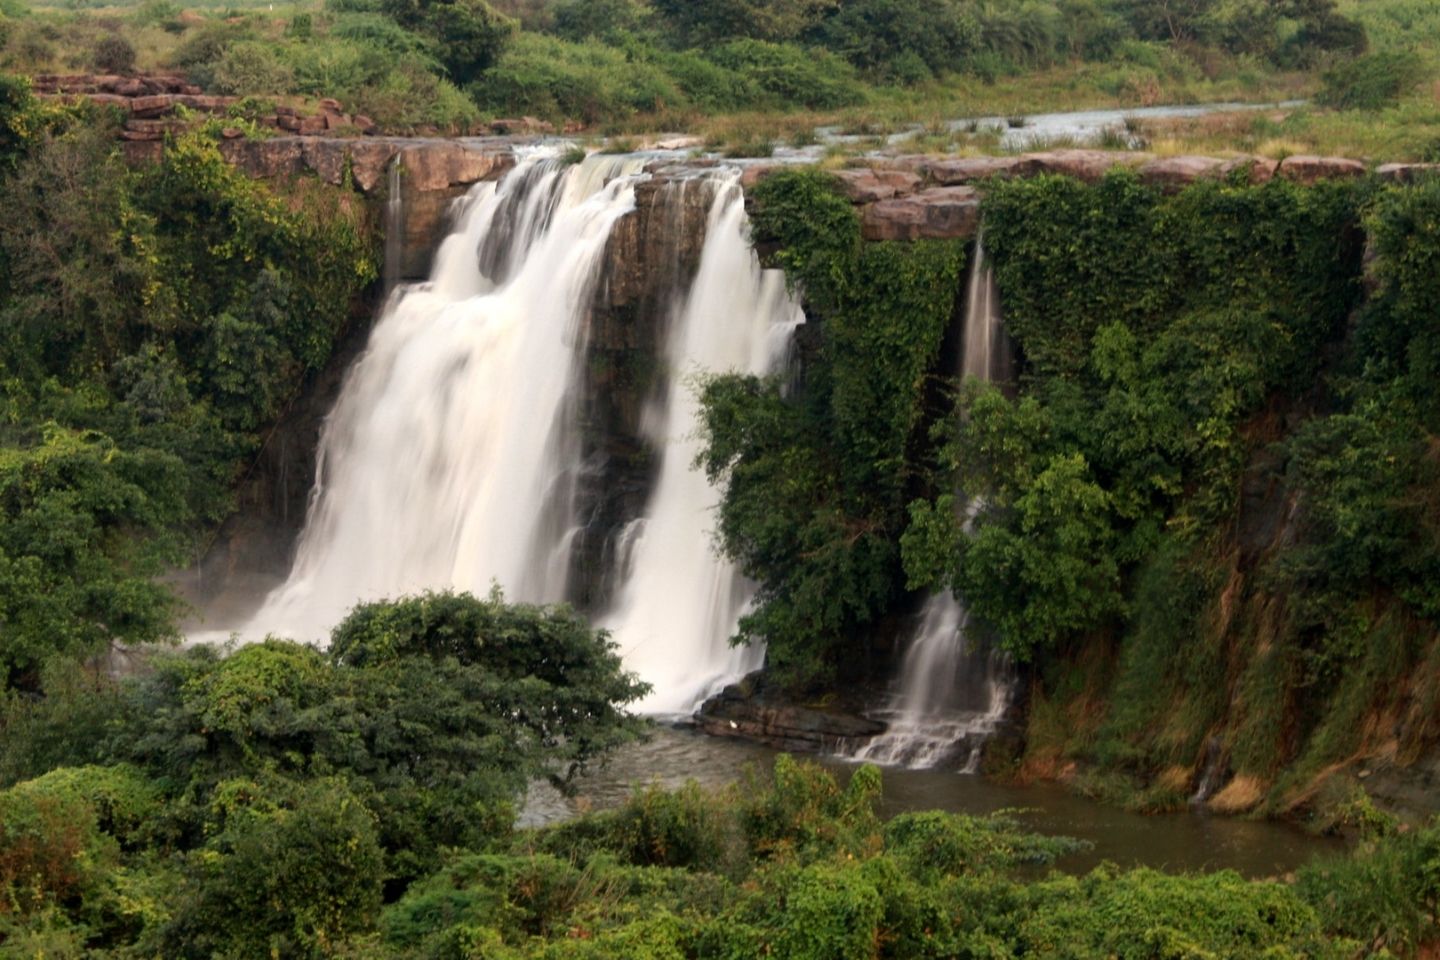 Ethipothala Waterfalls from Hyderabad